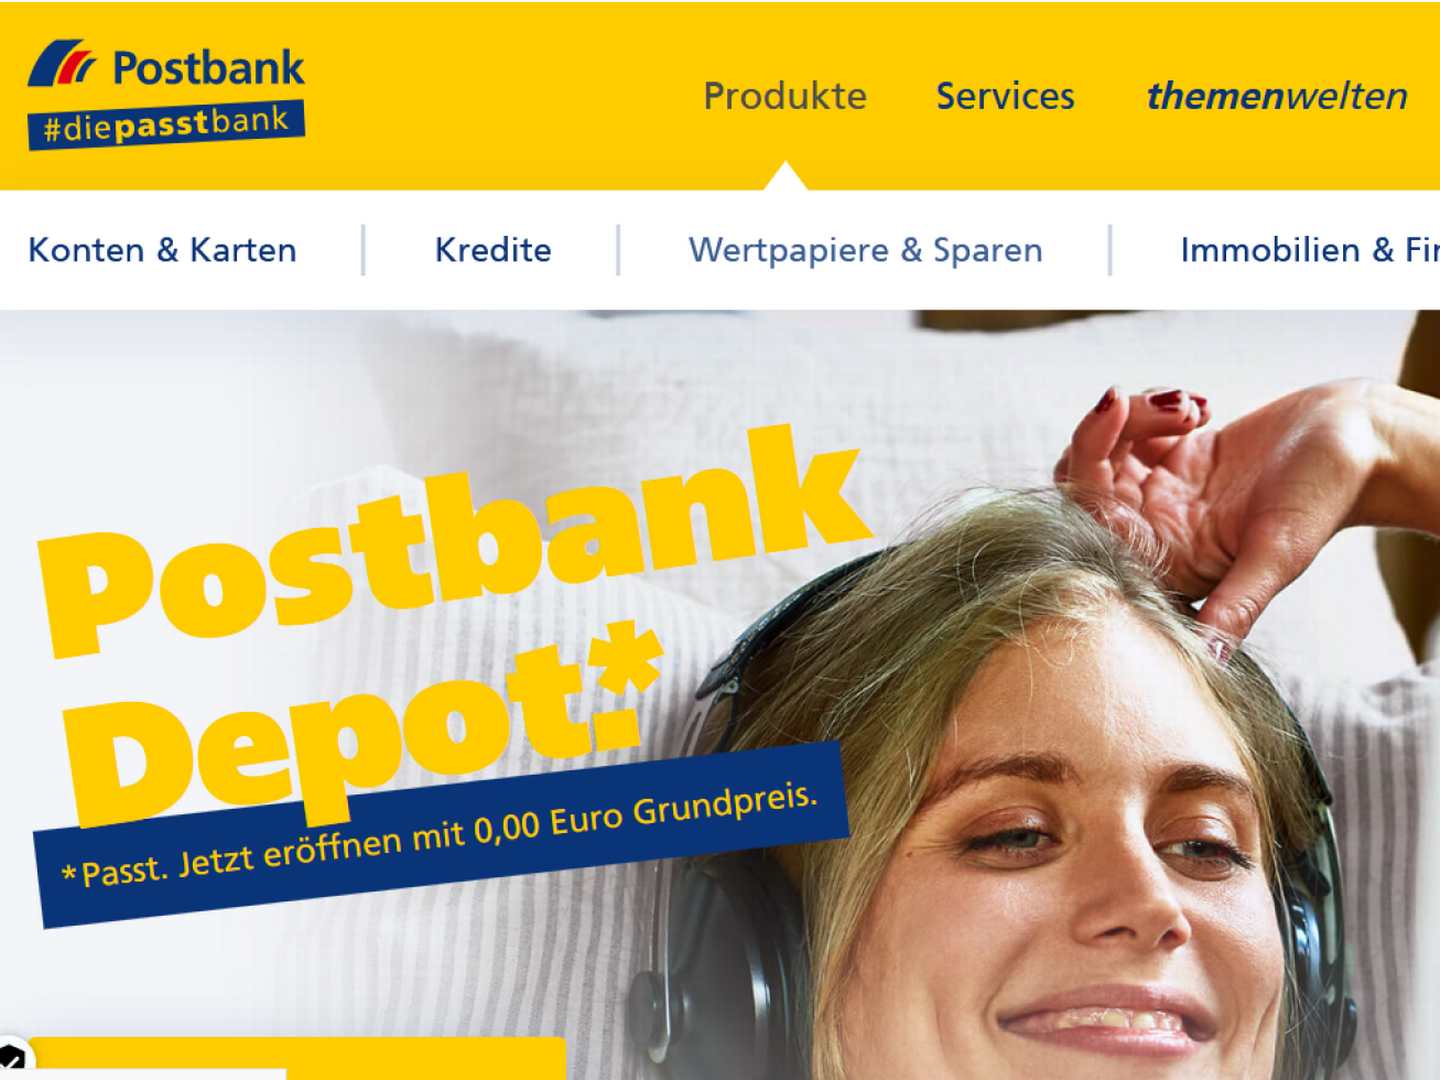 Postbank, "diepasstbank" - Werbe-Slogan aus besseren Zeiten | Foto: Postbank